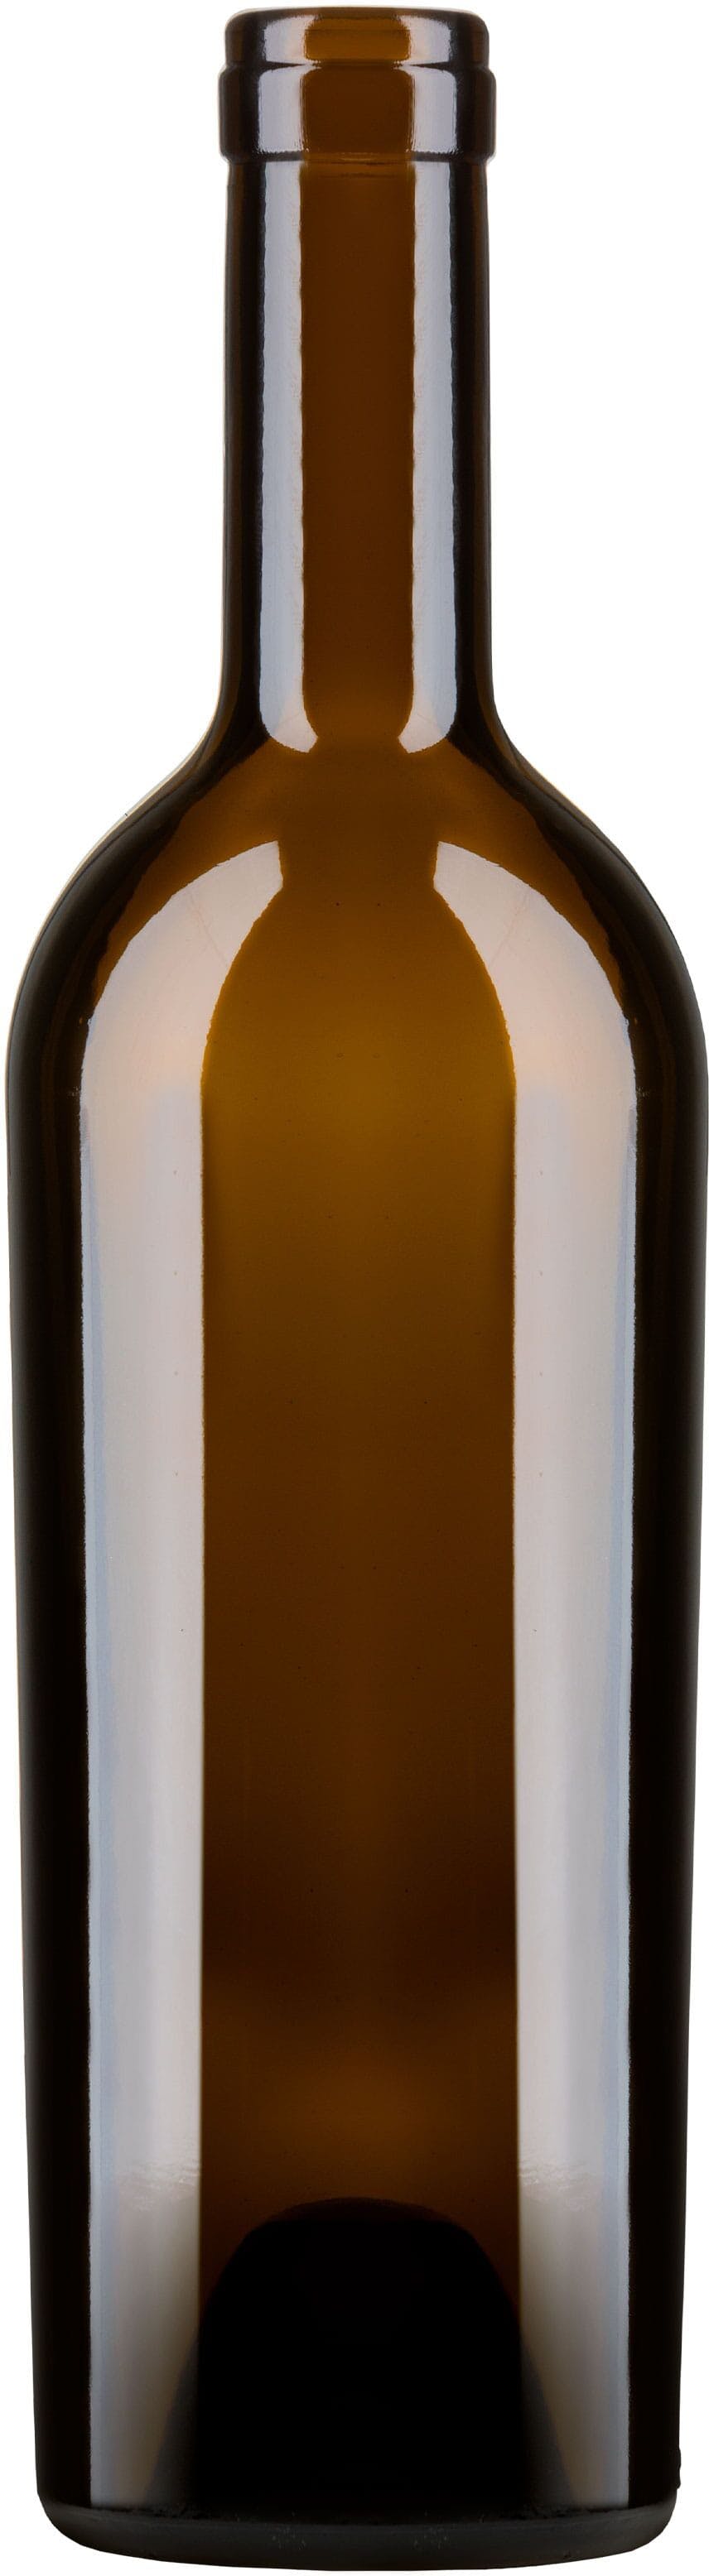 Bottle BORDELESA JUMBO IBERICA 500 ml BG-Cork